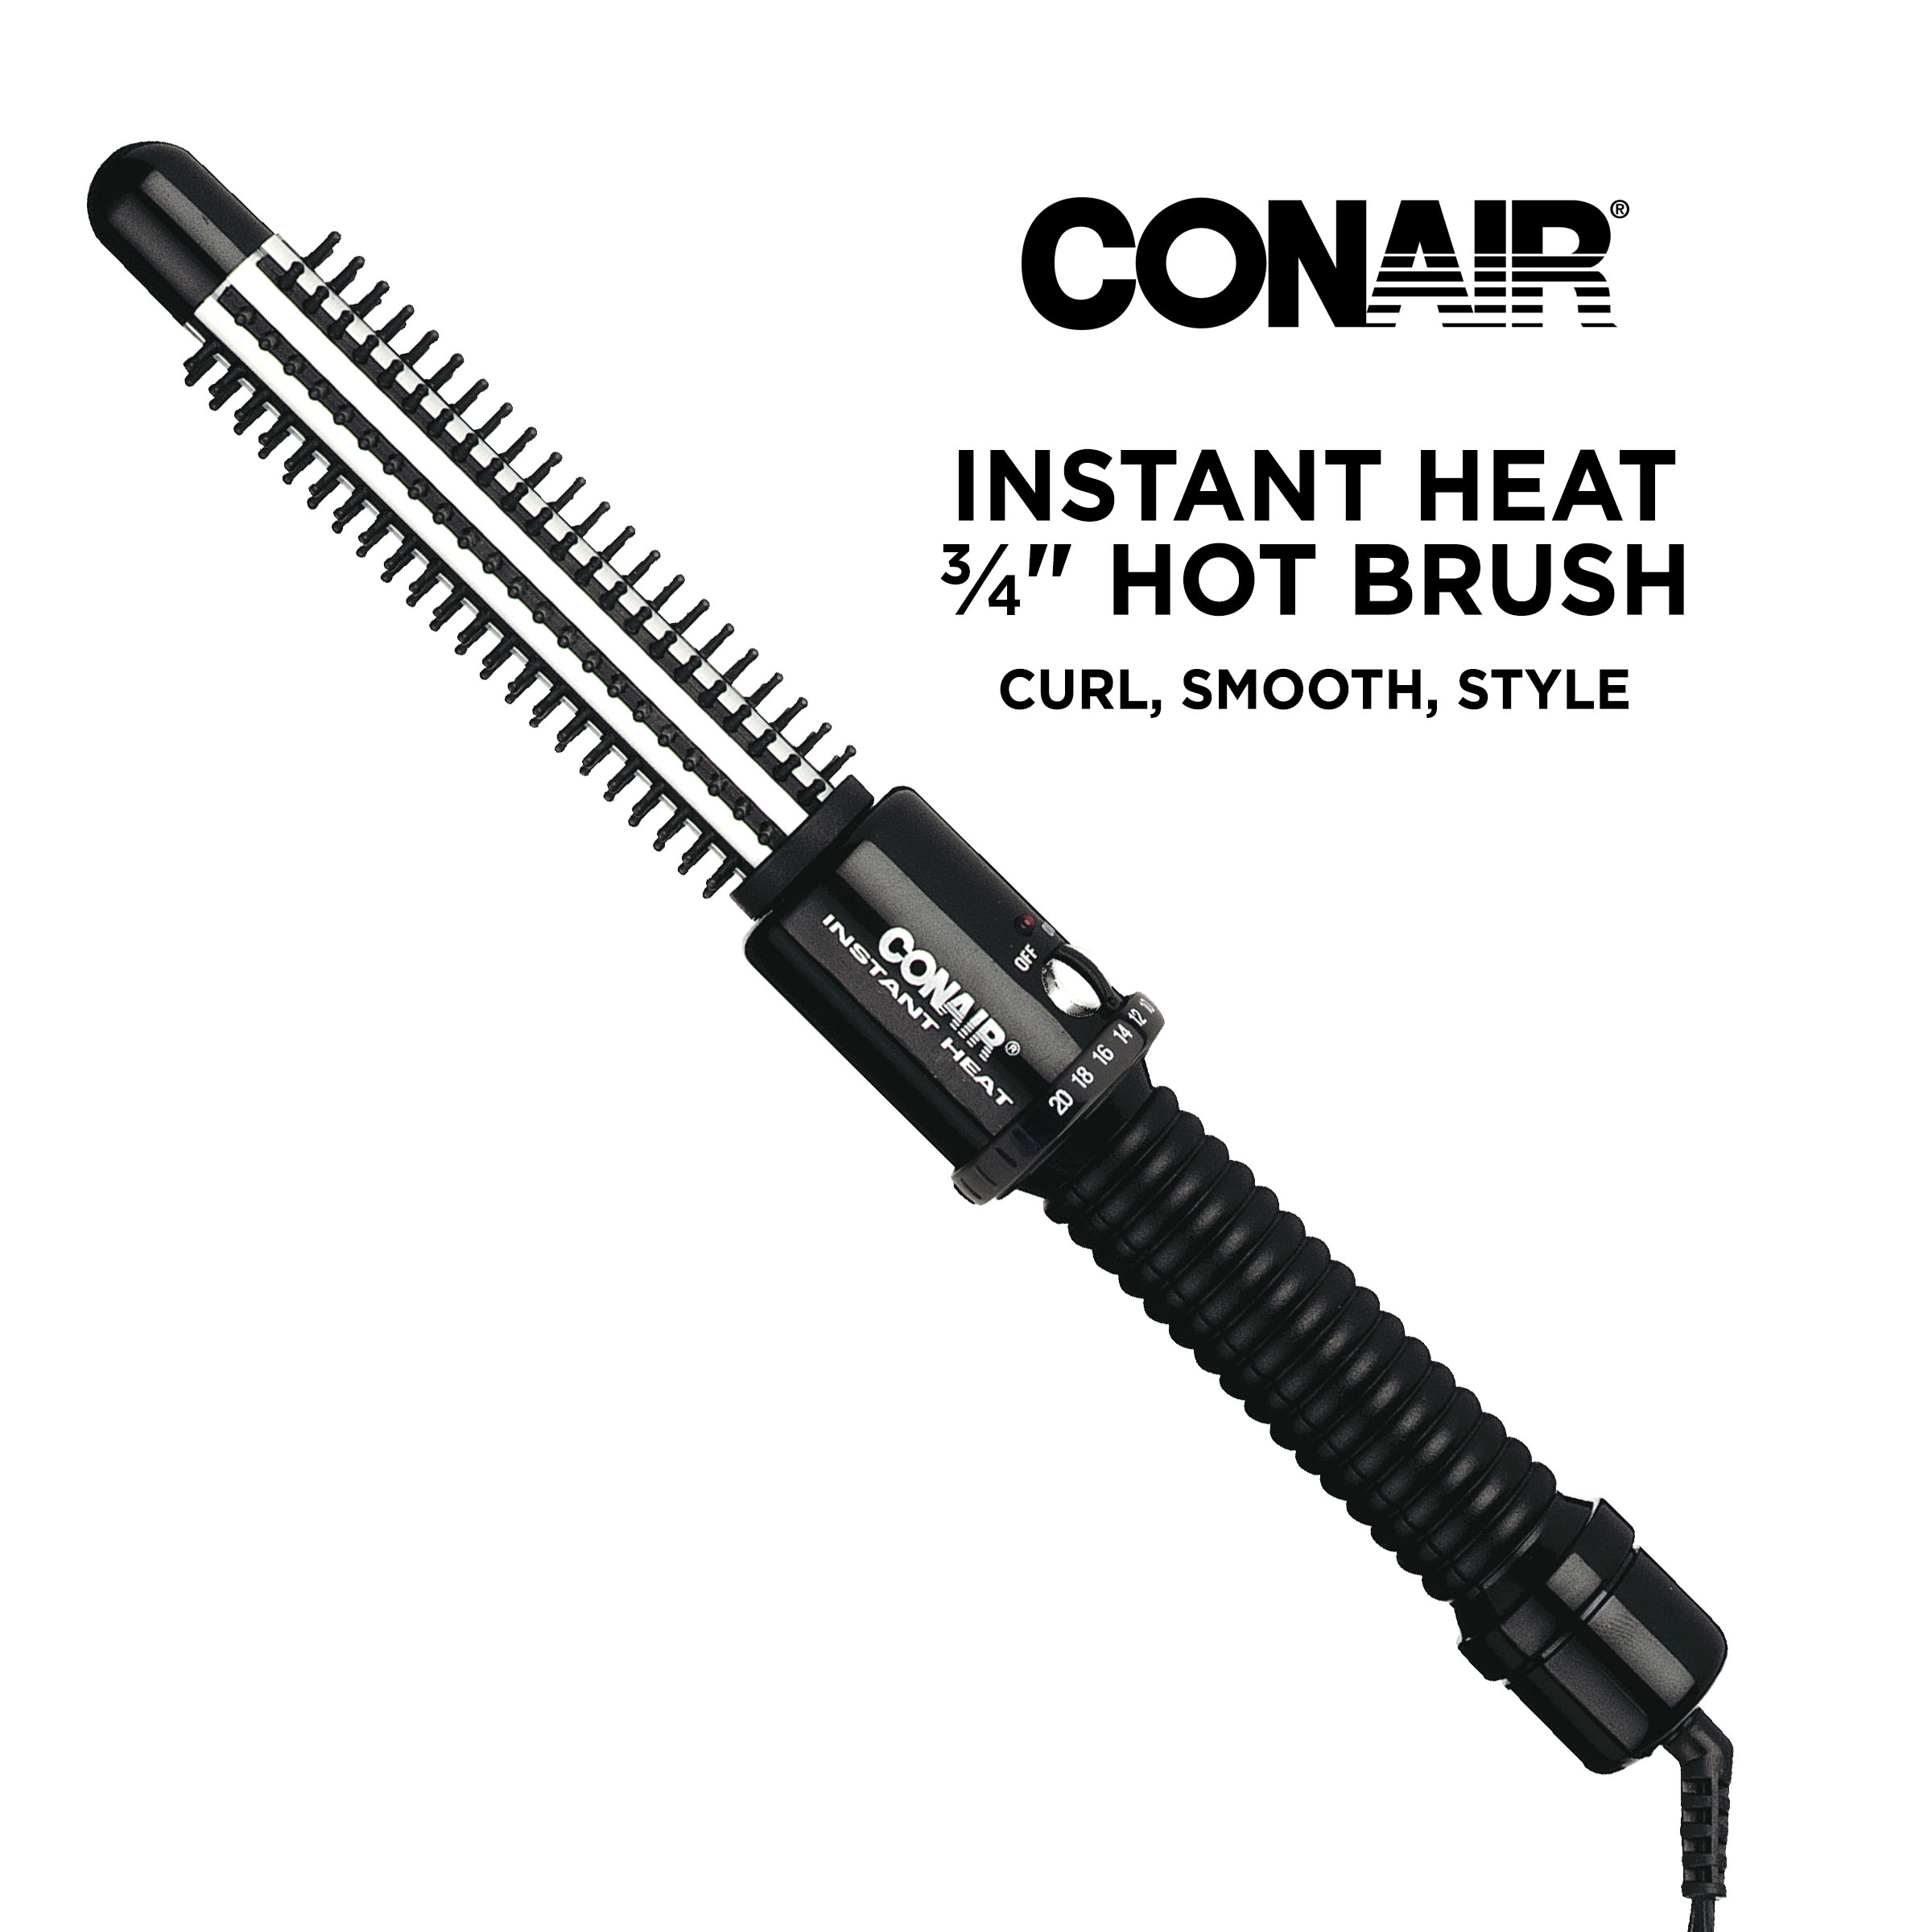 Conair Instant Heat Swivel Cord Hot Hair Brush, Black BC84N - image 2 of 6